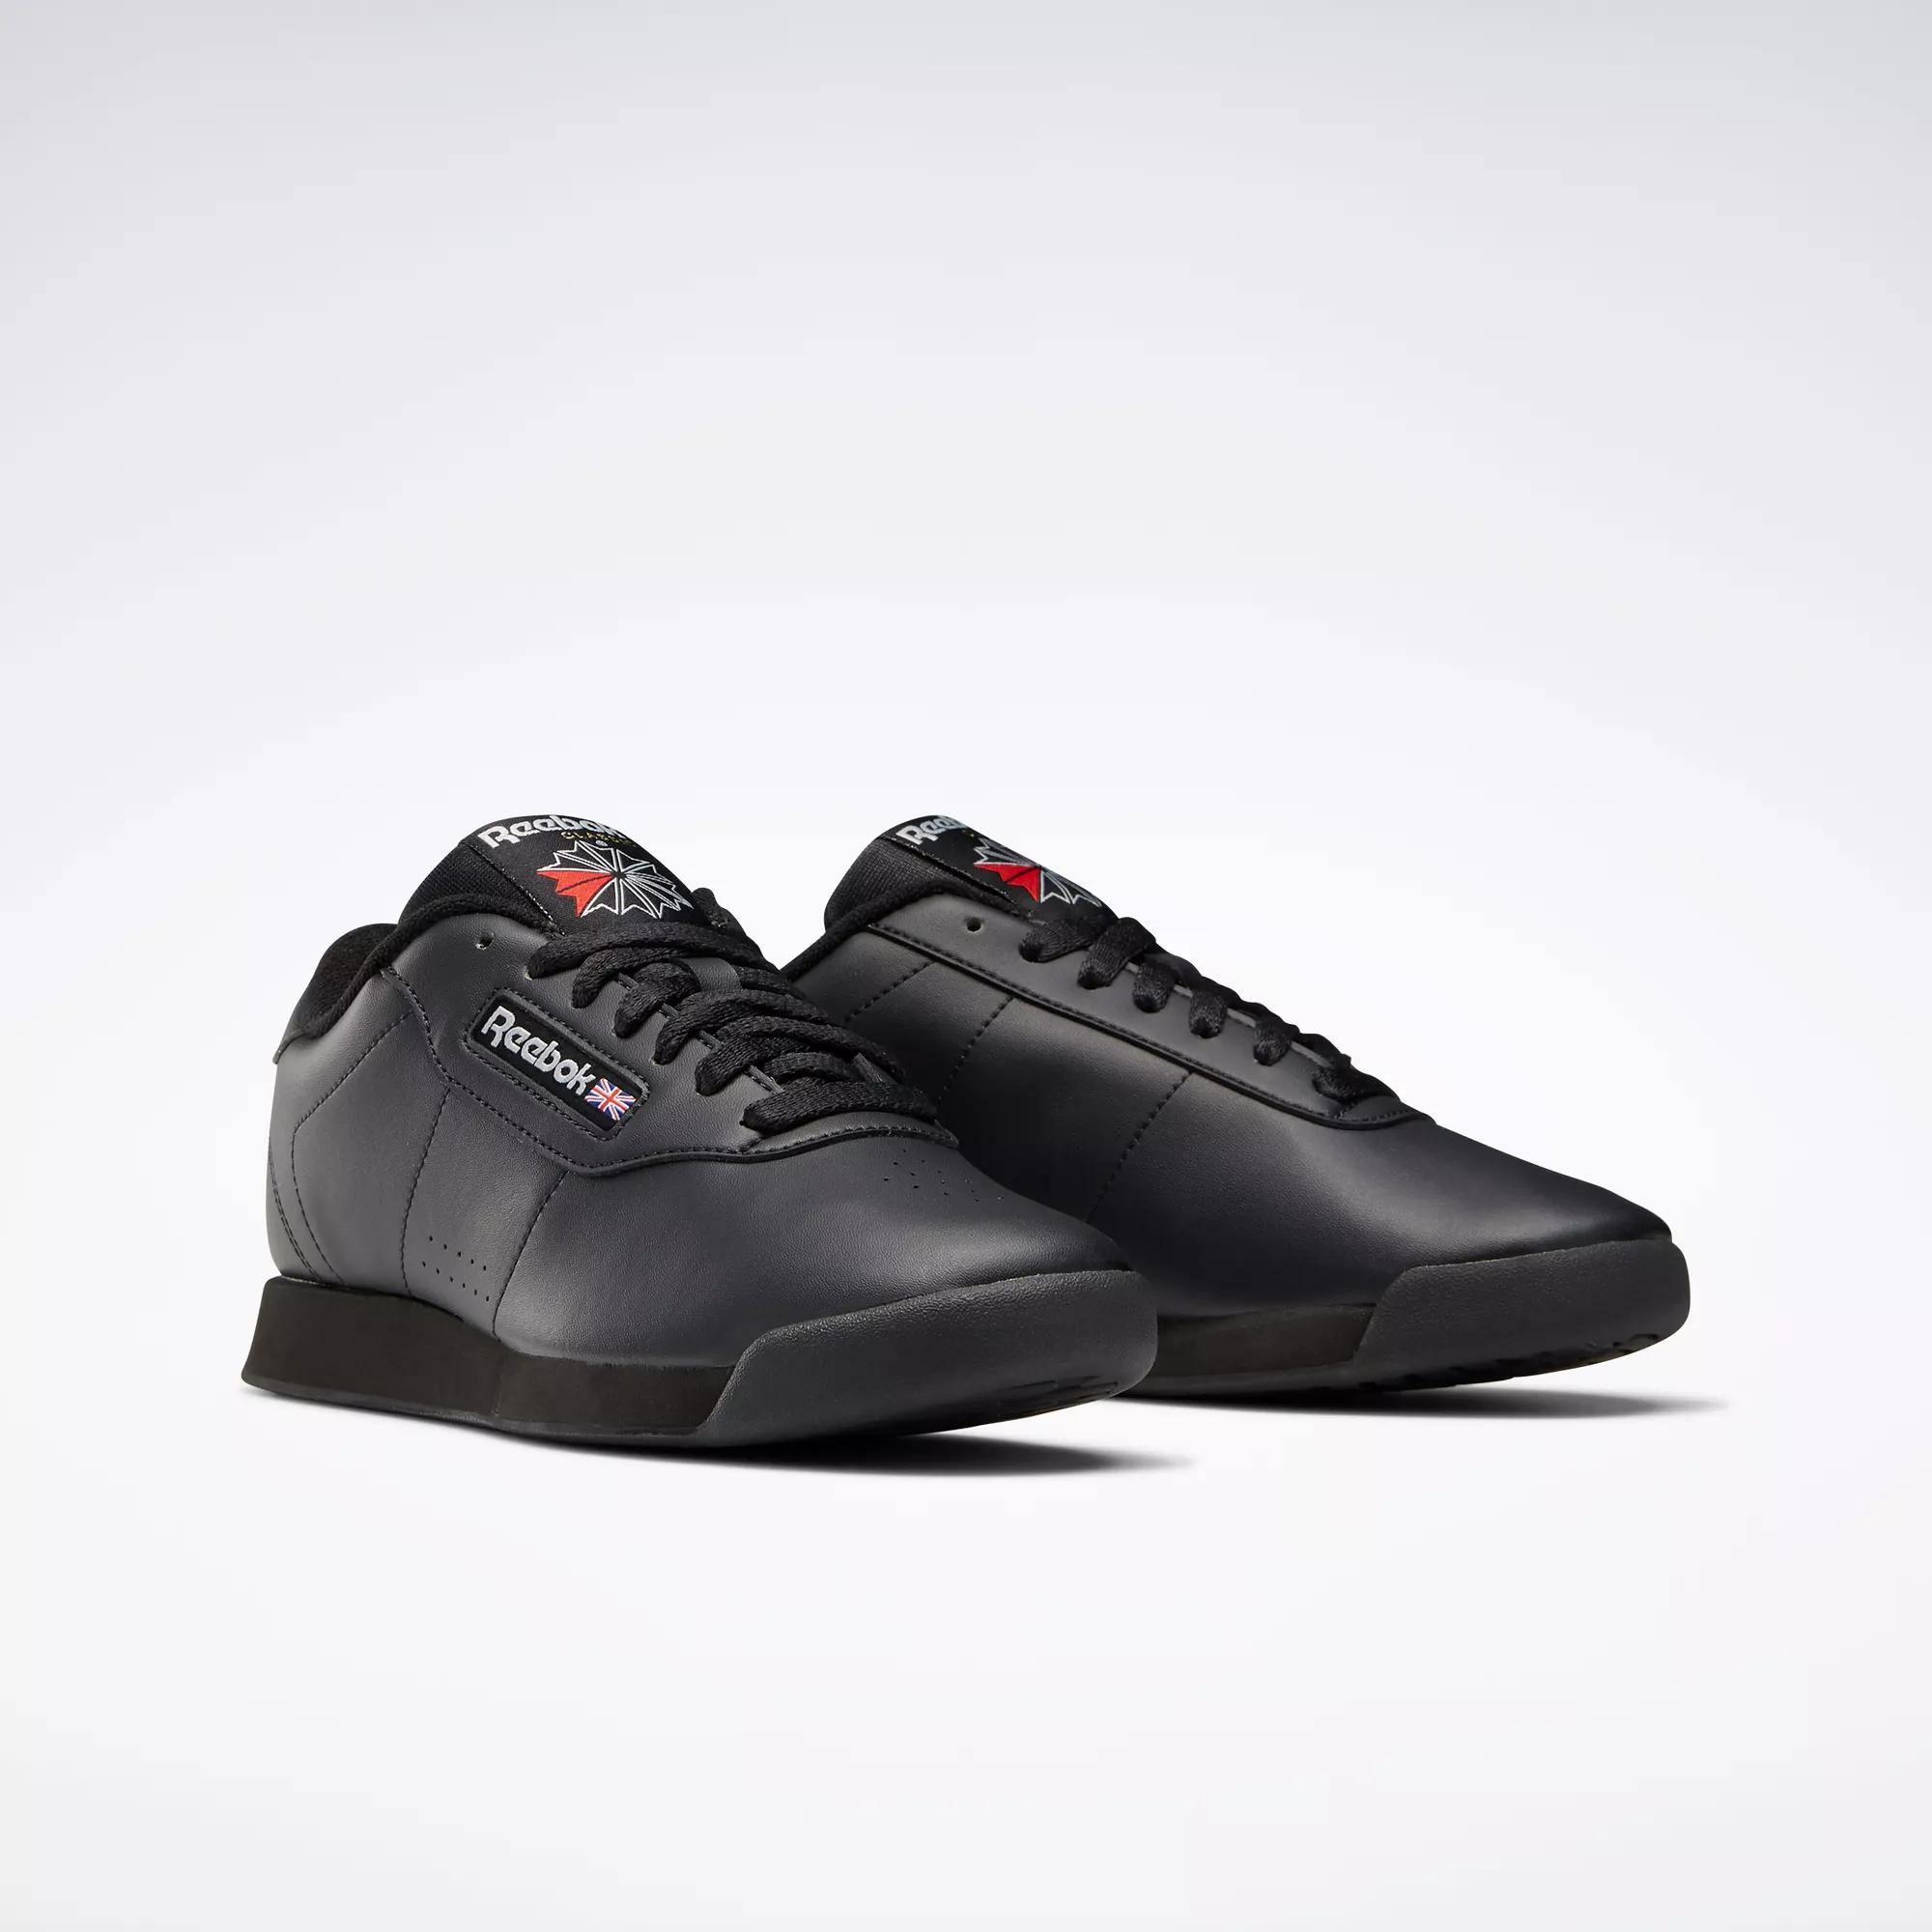 Reebok Classic Princess Women's Sneakers Athletic Shoe Black Trainers #344  #120